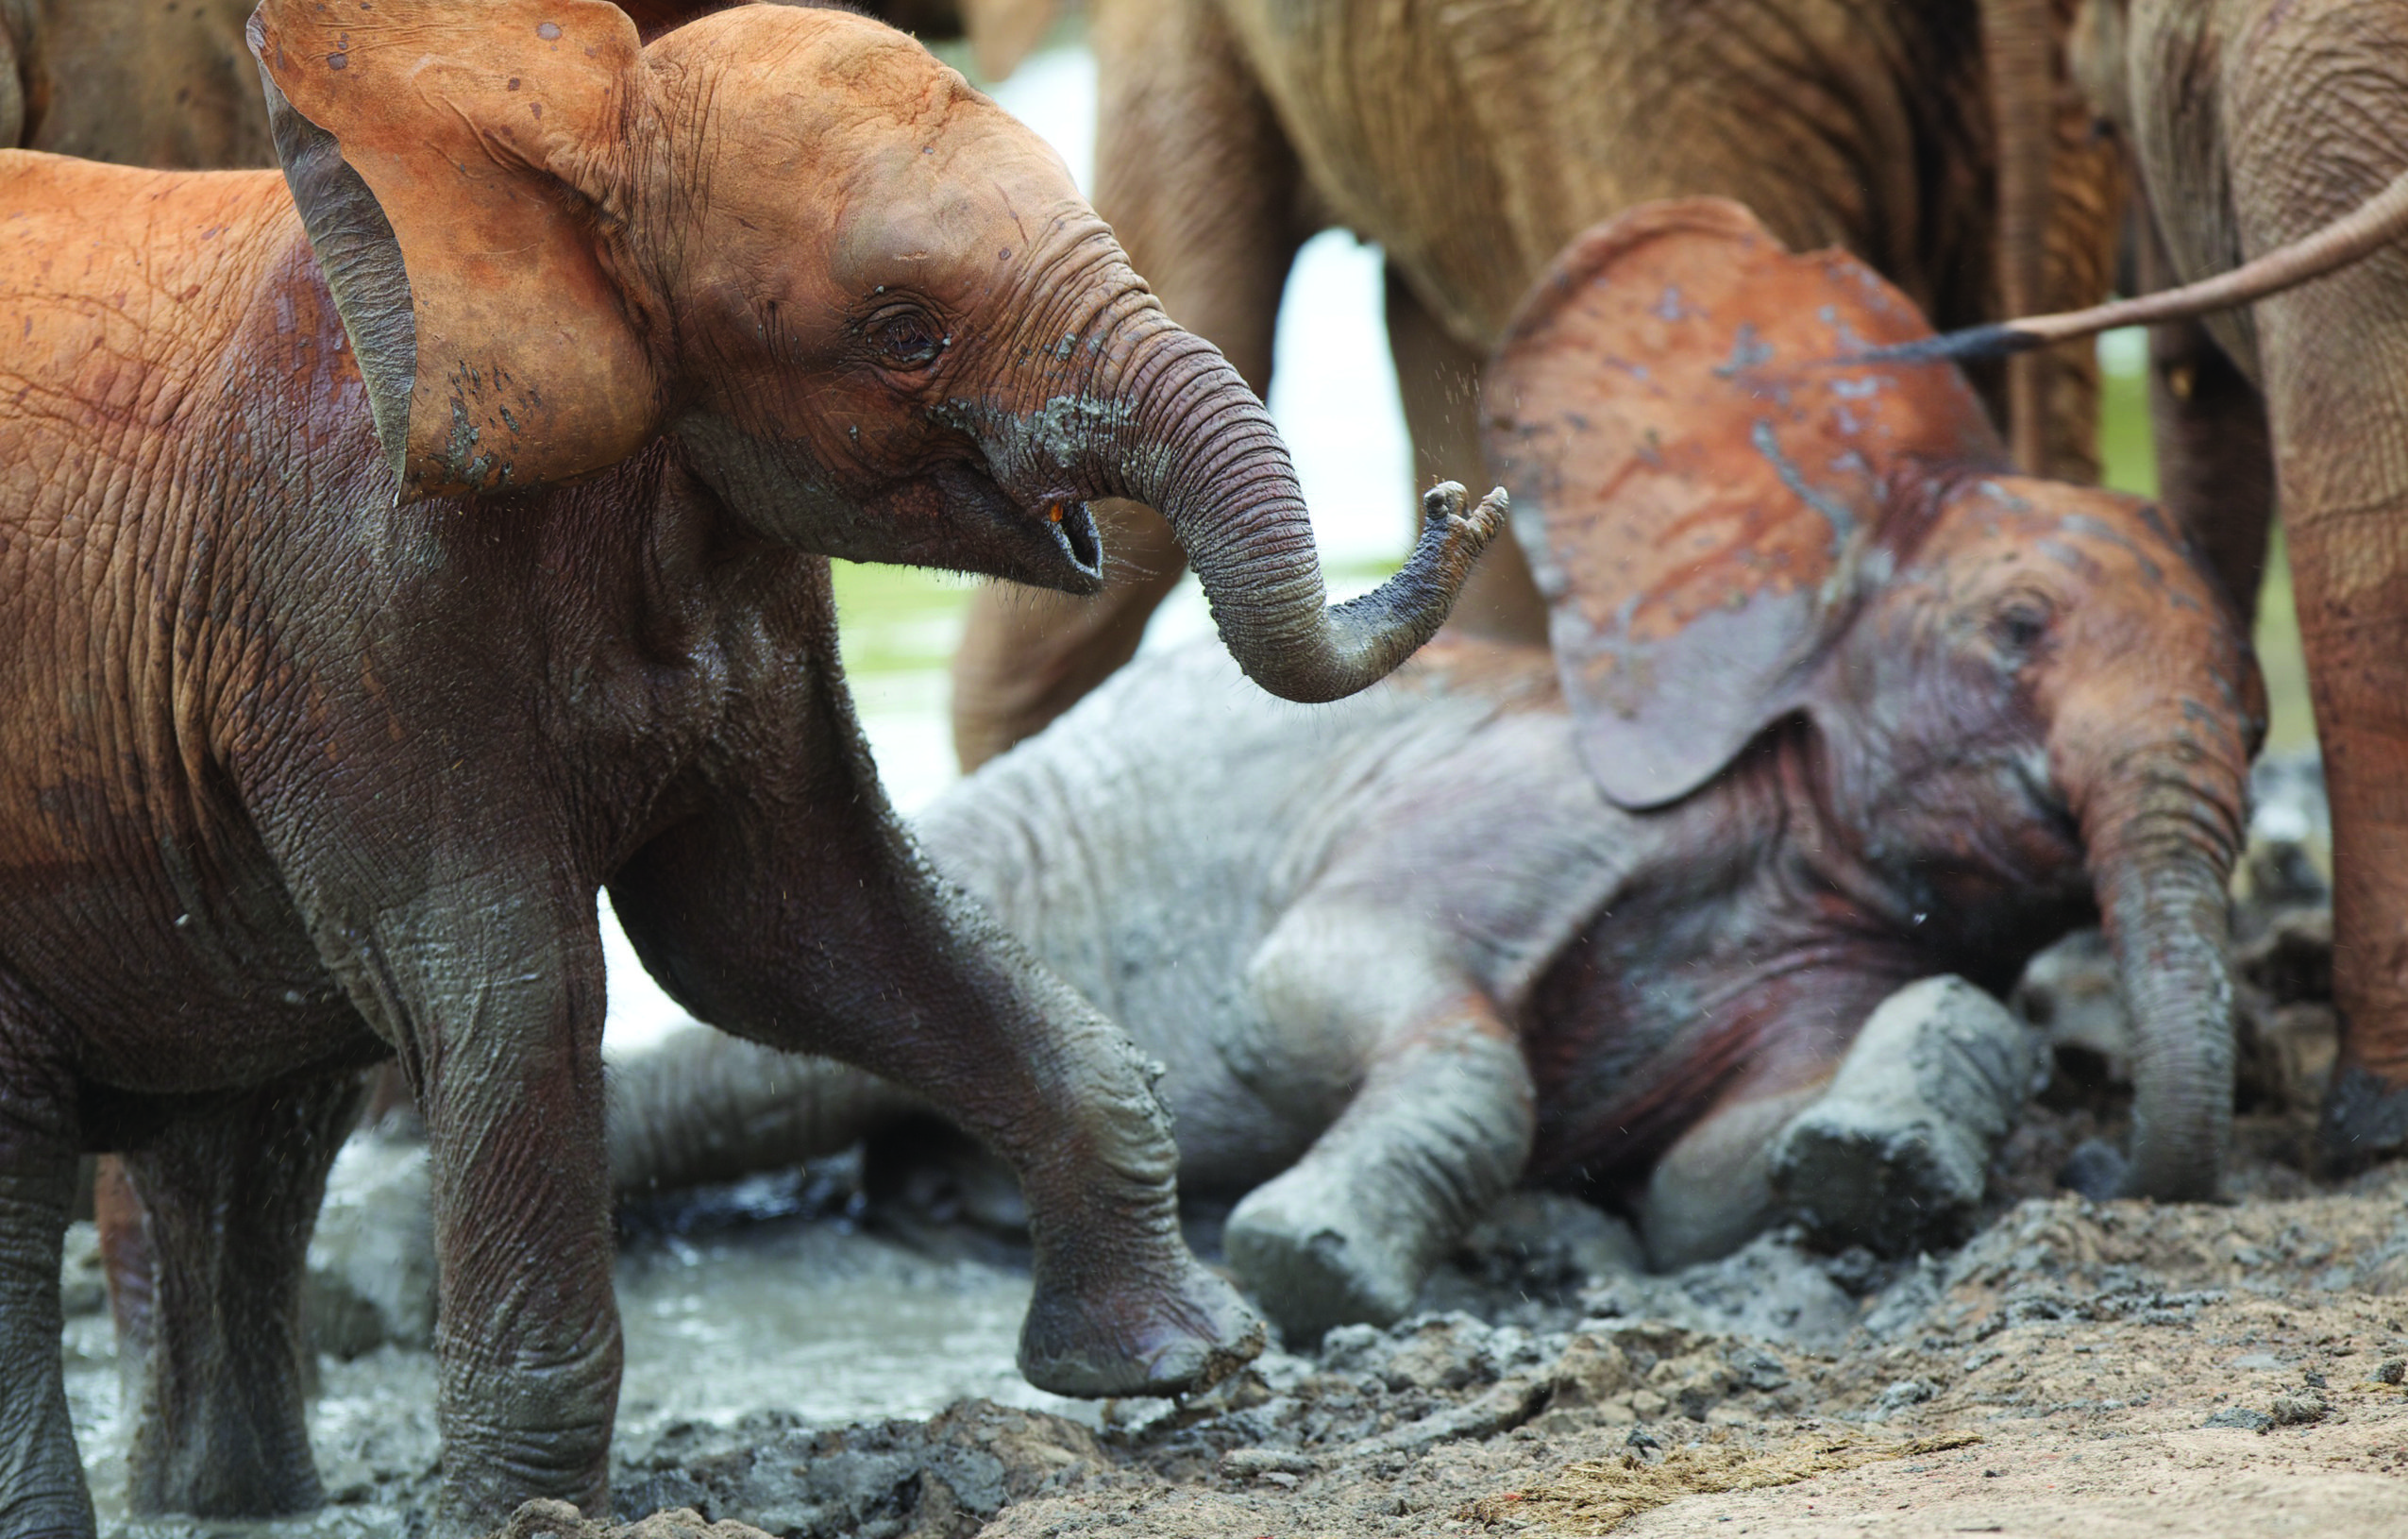 Choosing responsible wildlife encounters on safari, Baby Elephant